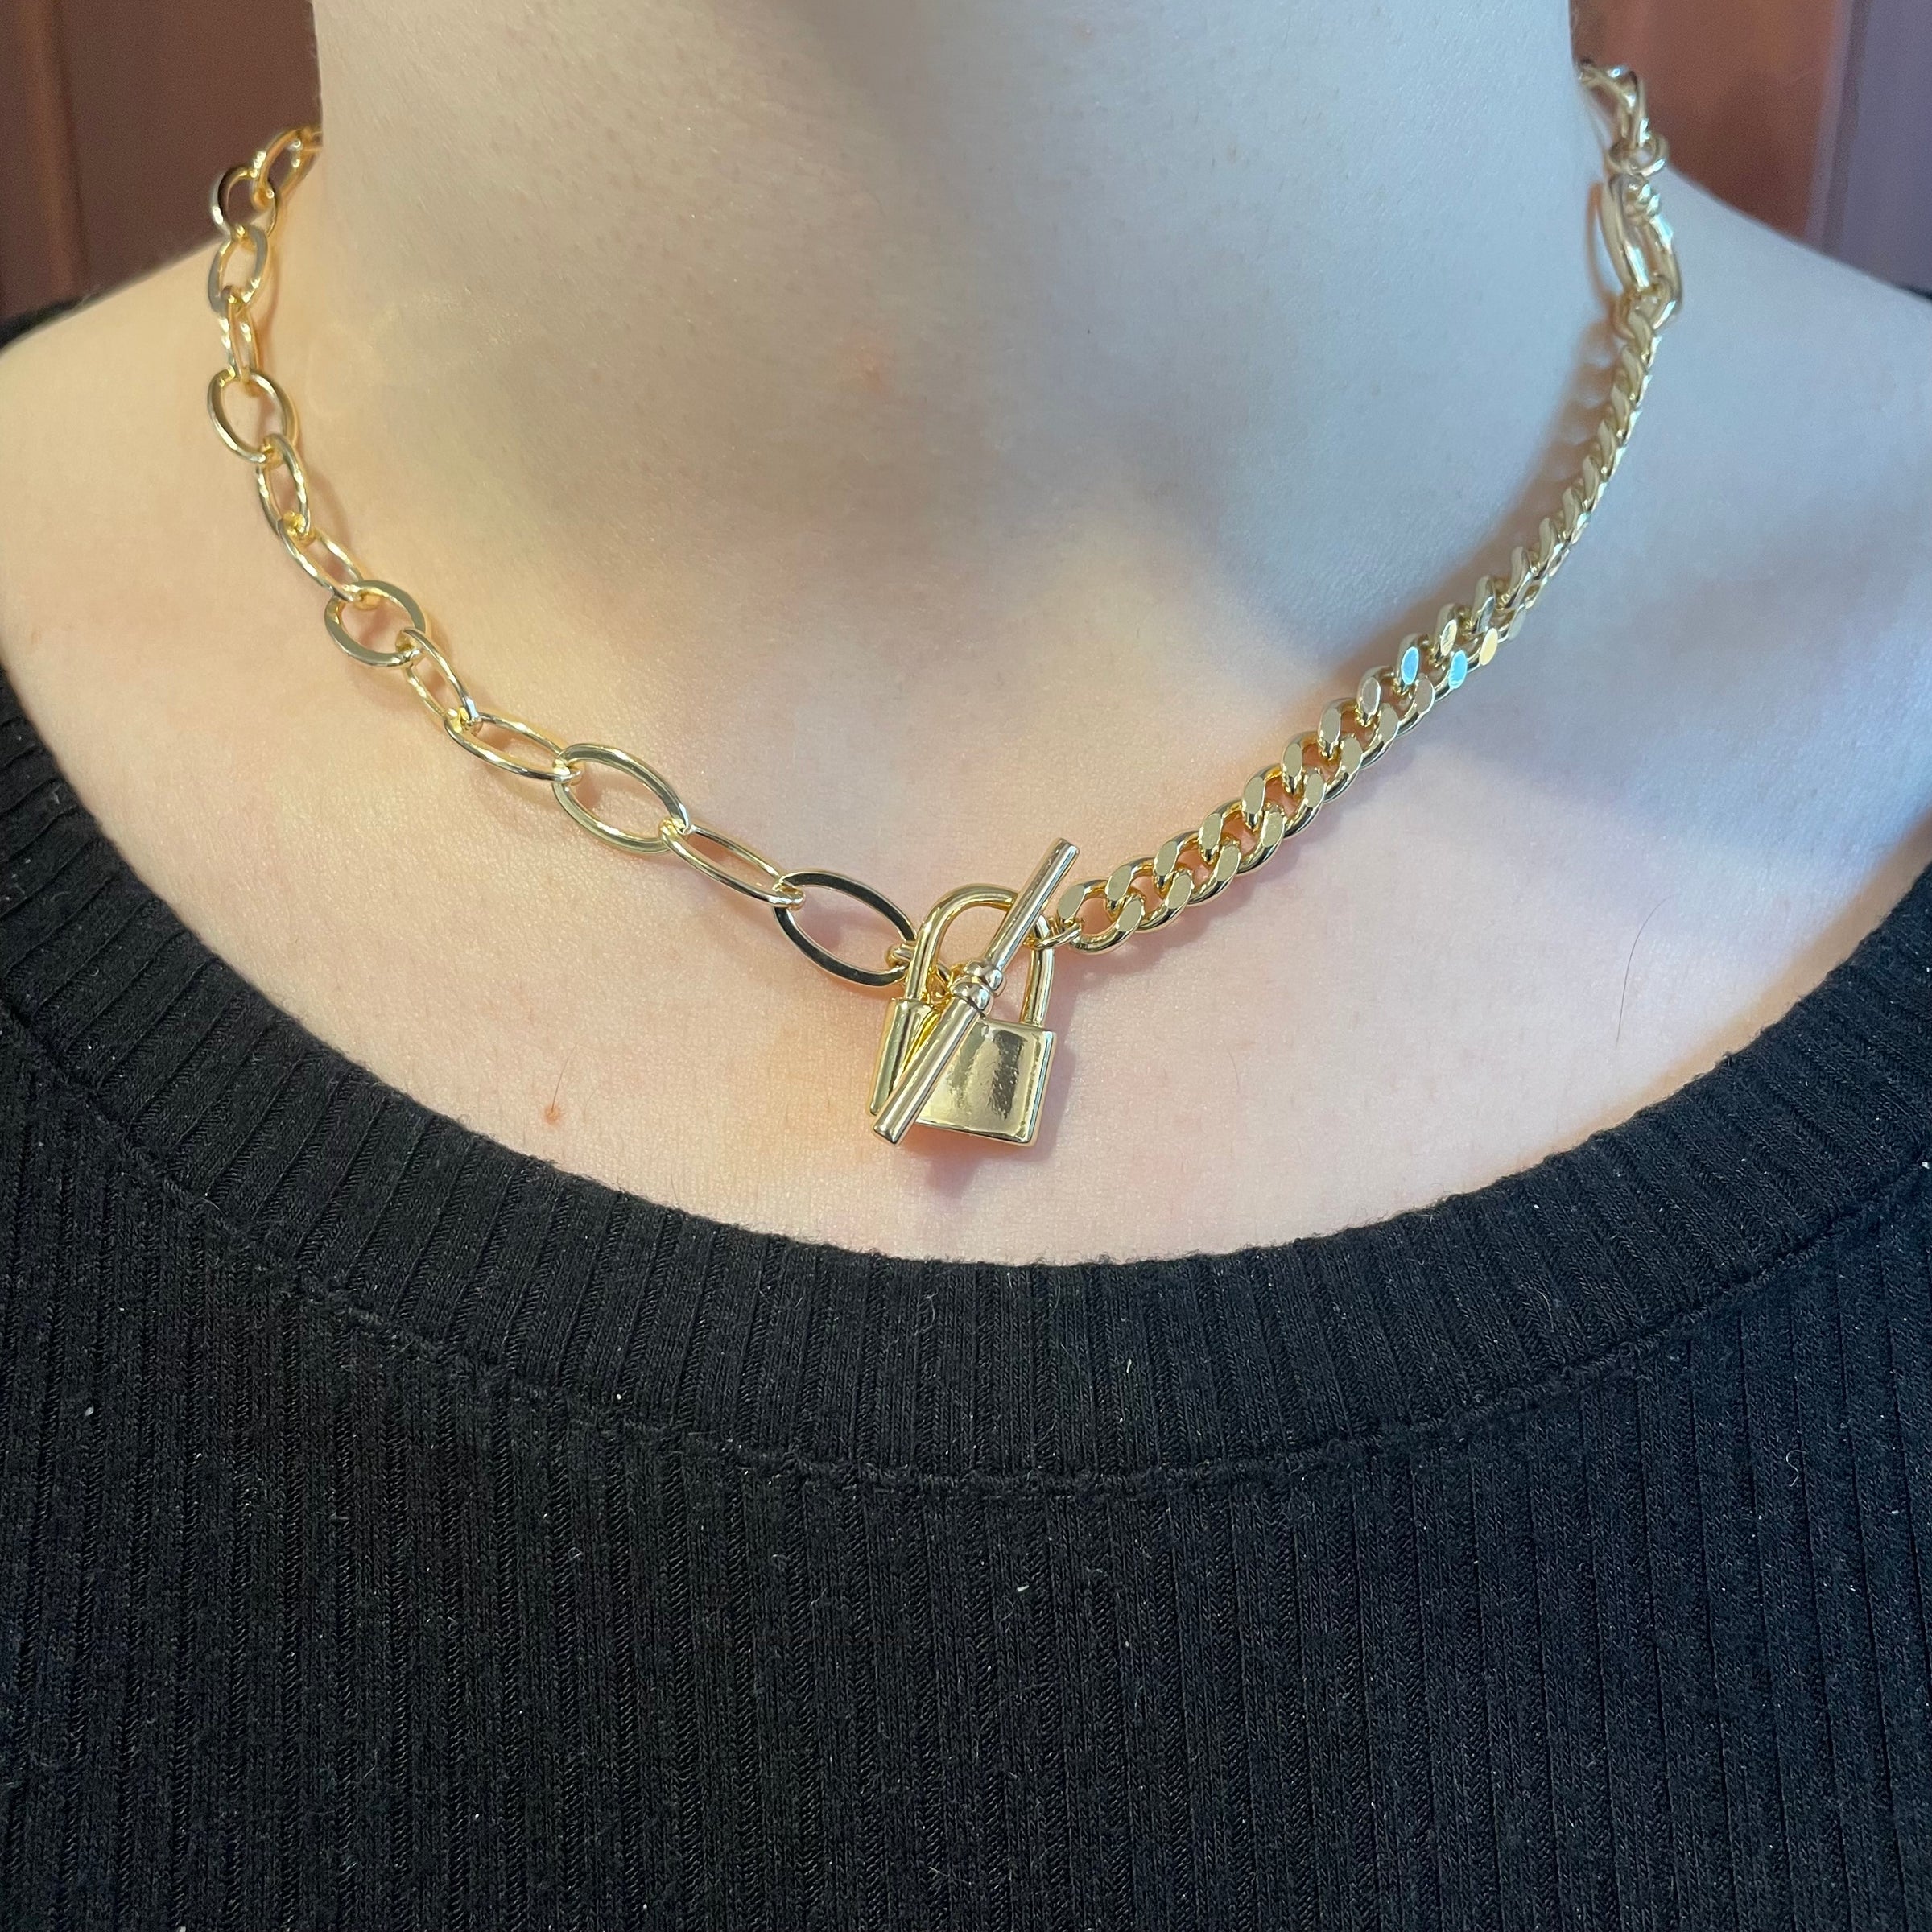 Louis Vuitton, Jewelry, Louis Vuitton Lock Chain Necklace